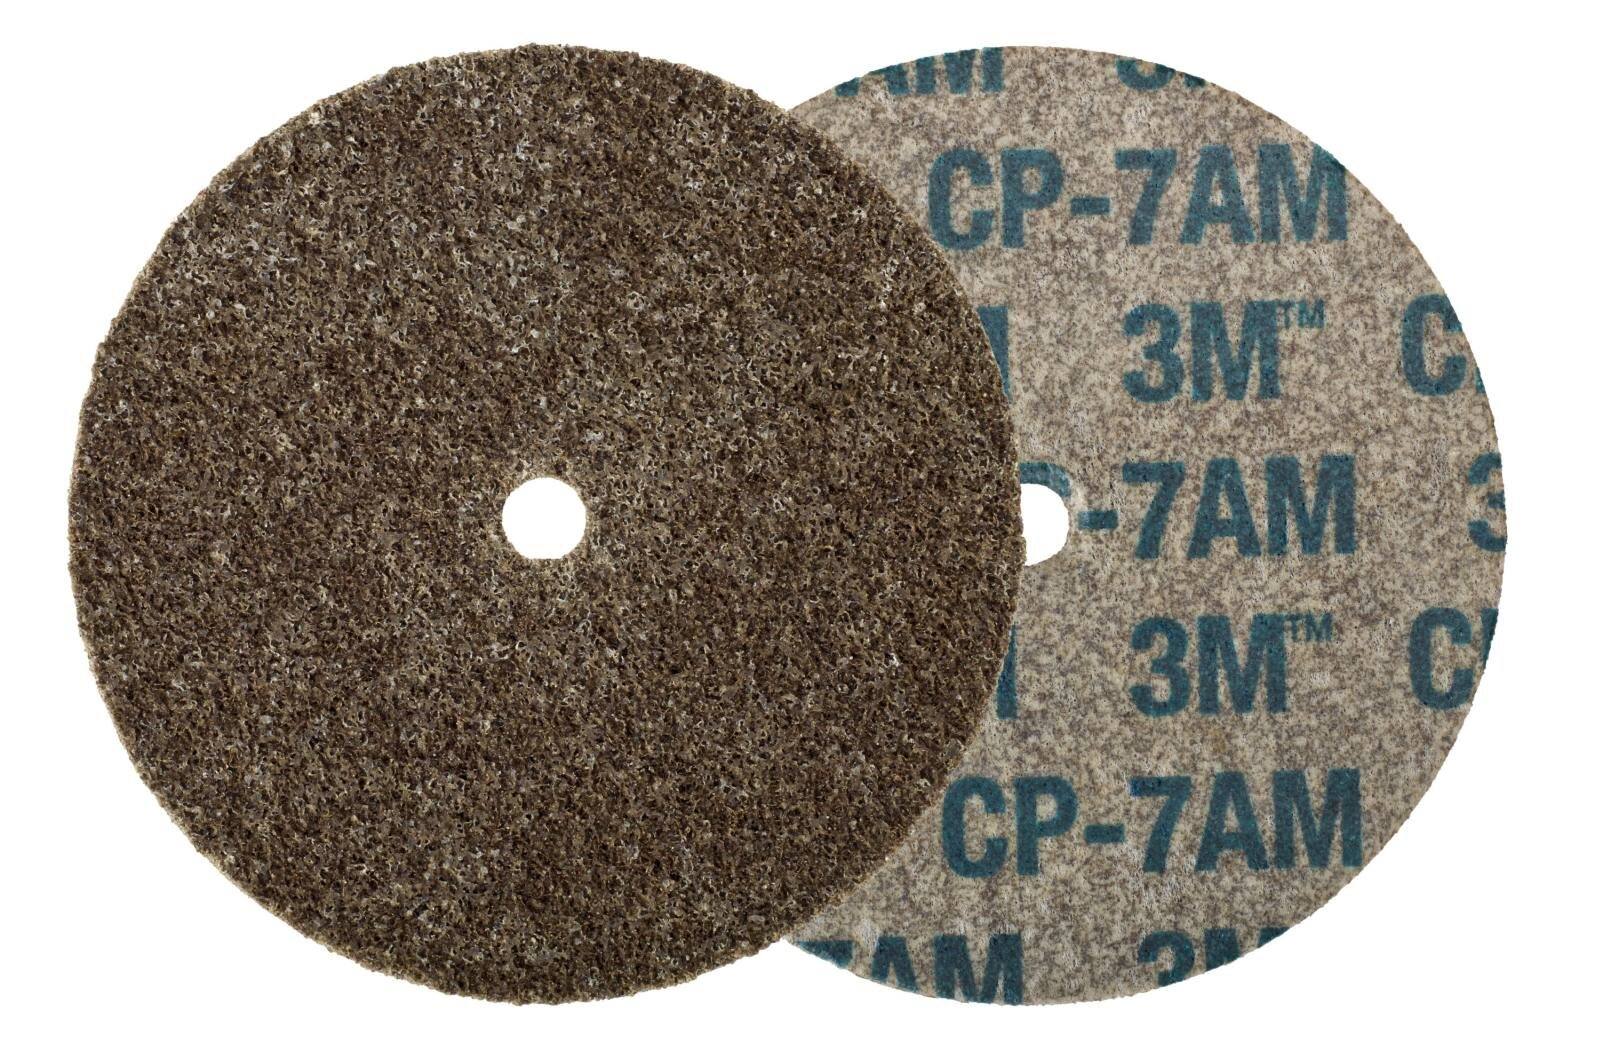  3M Scotch-Brite Roloc CD-levy CP-UR, 75 mm, 6 mm, 10 mm, 5, A, hienojakoinen